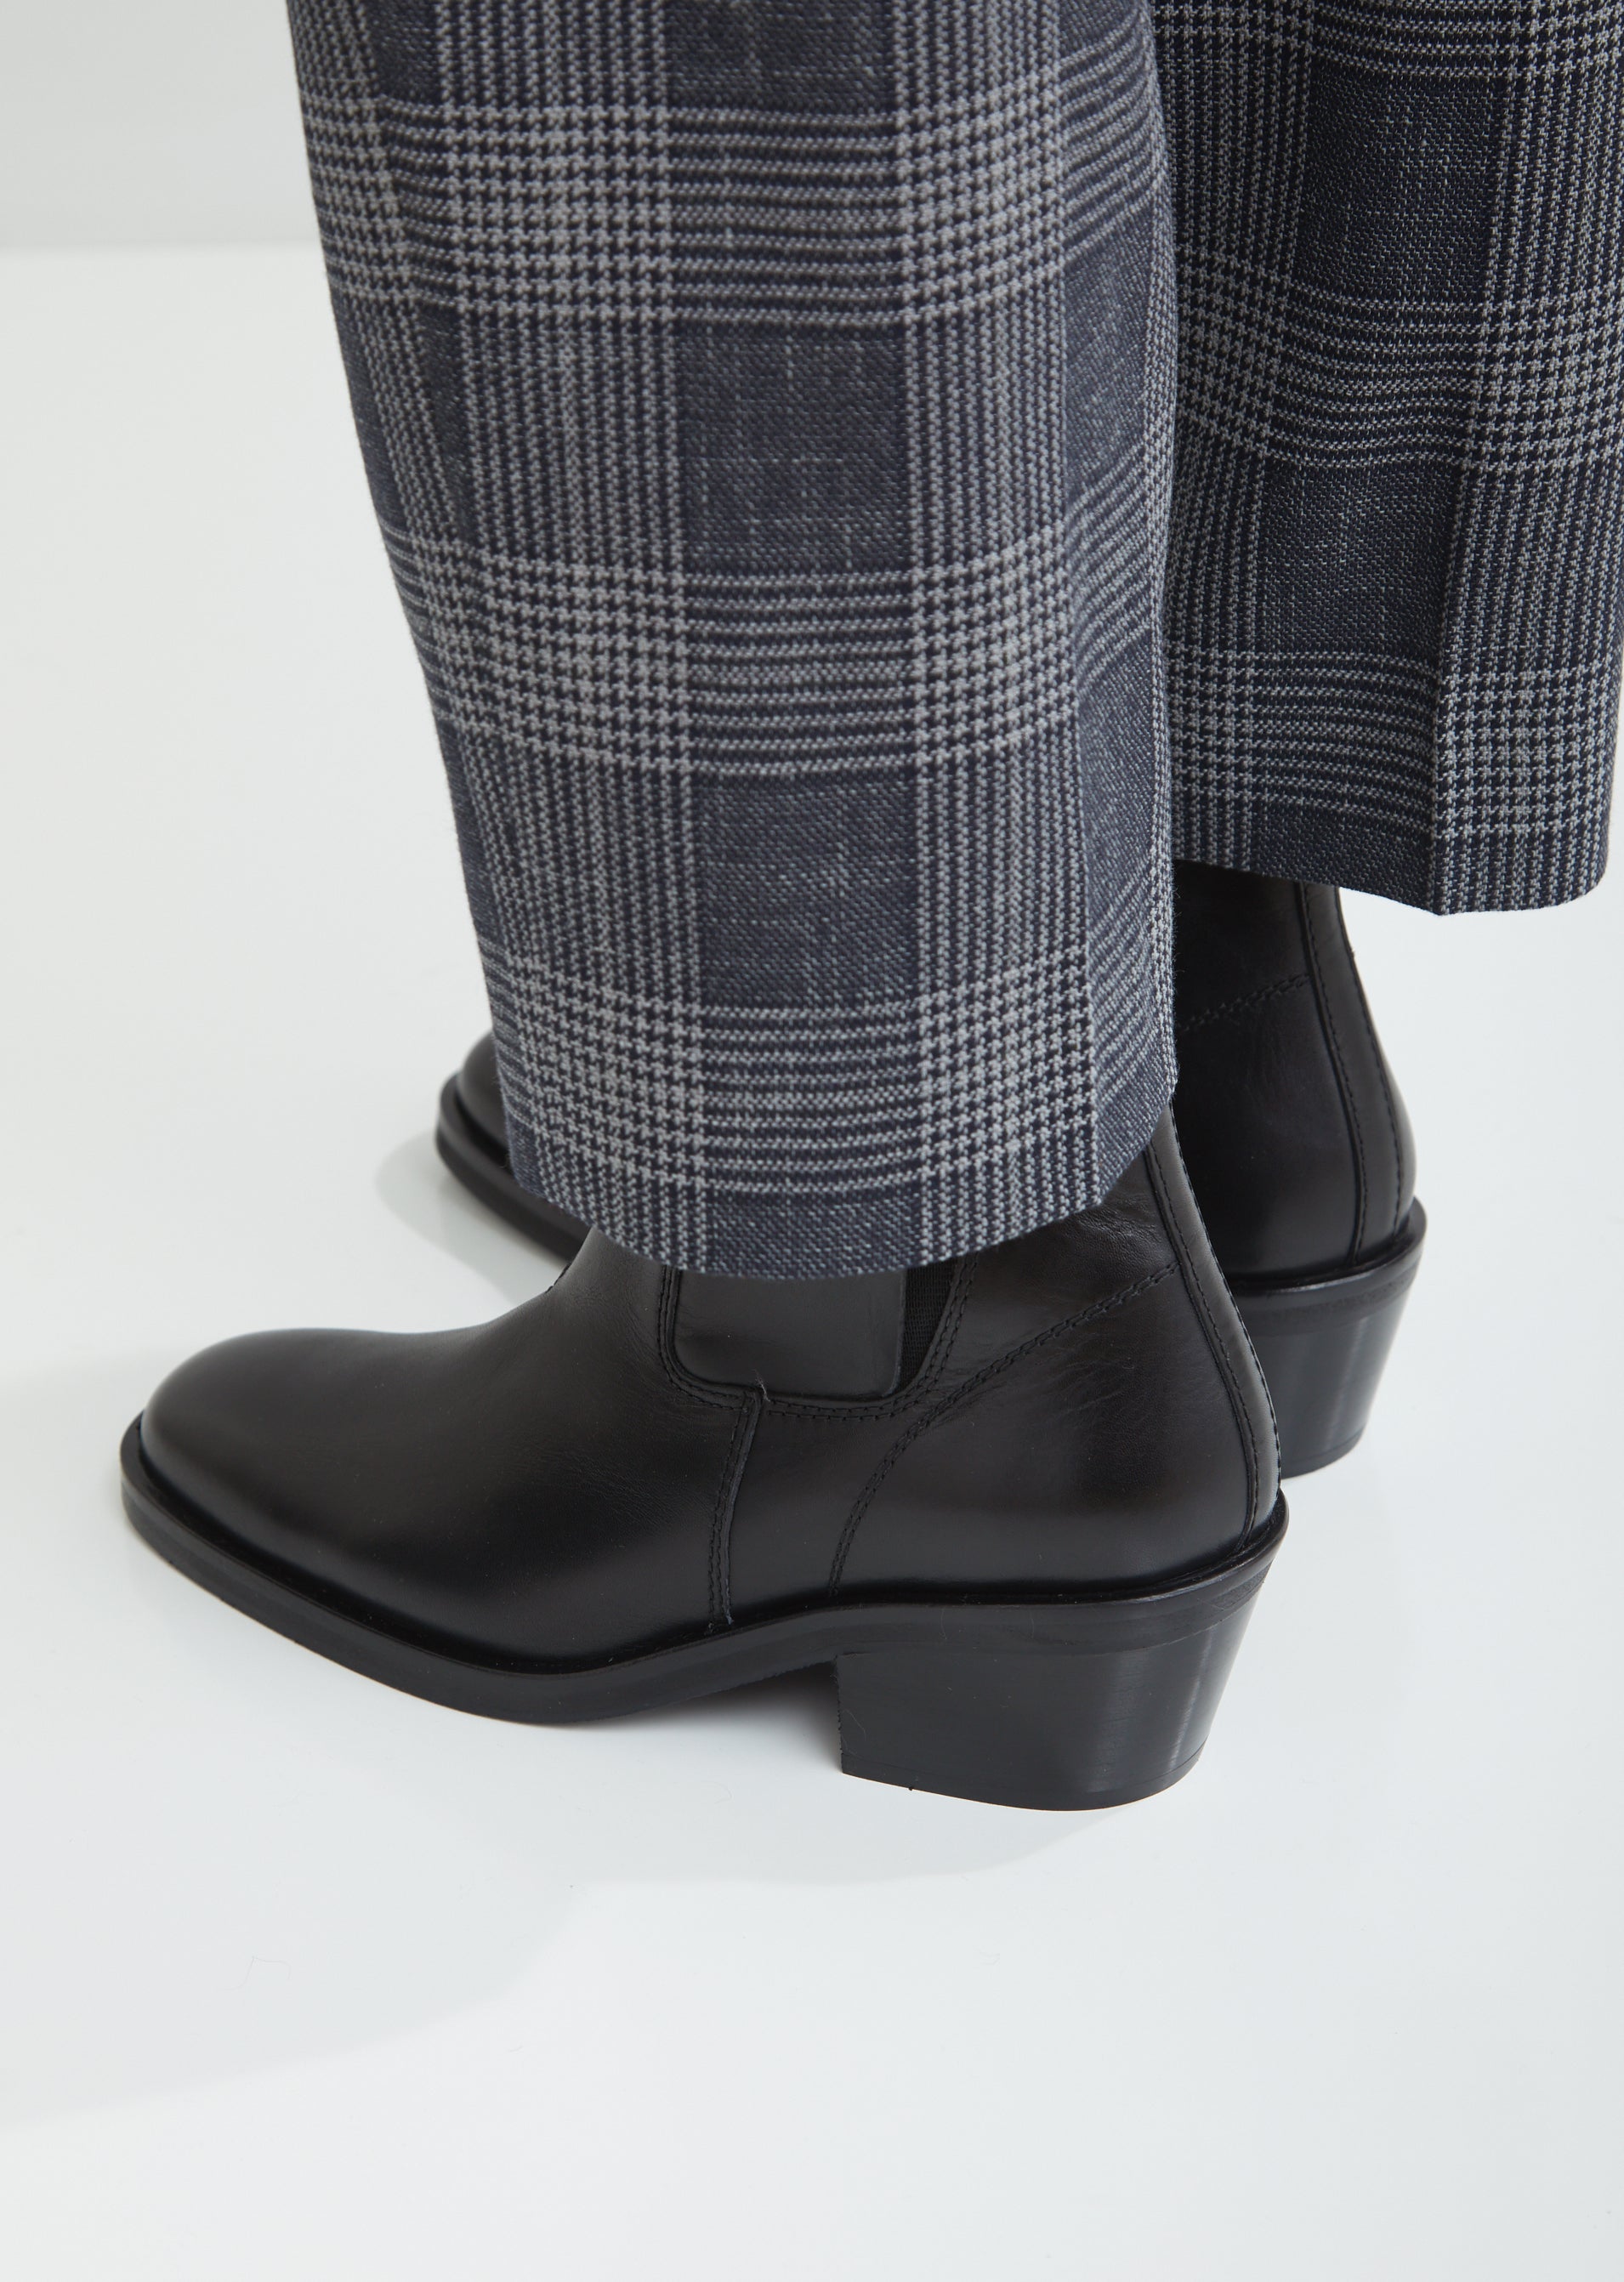 Balenciaga Platform Mens Boots Size 43US 10 in Black Leather  eBay